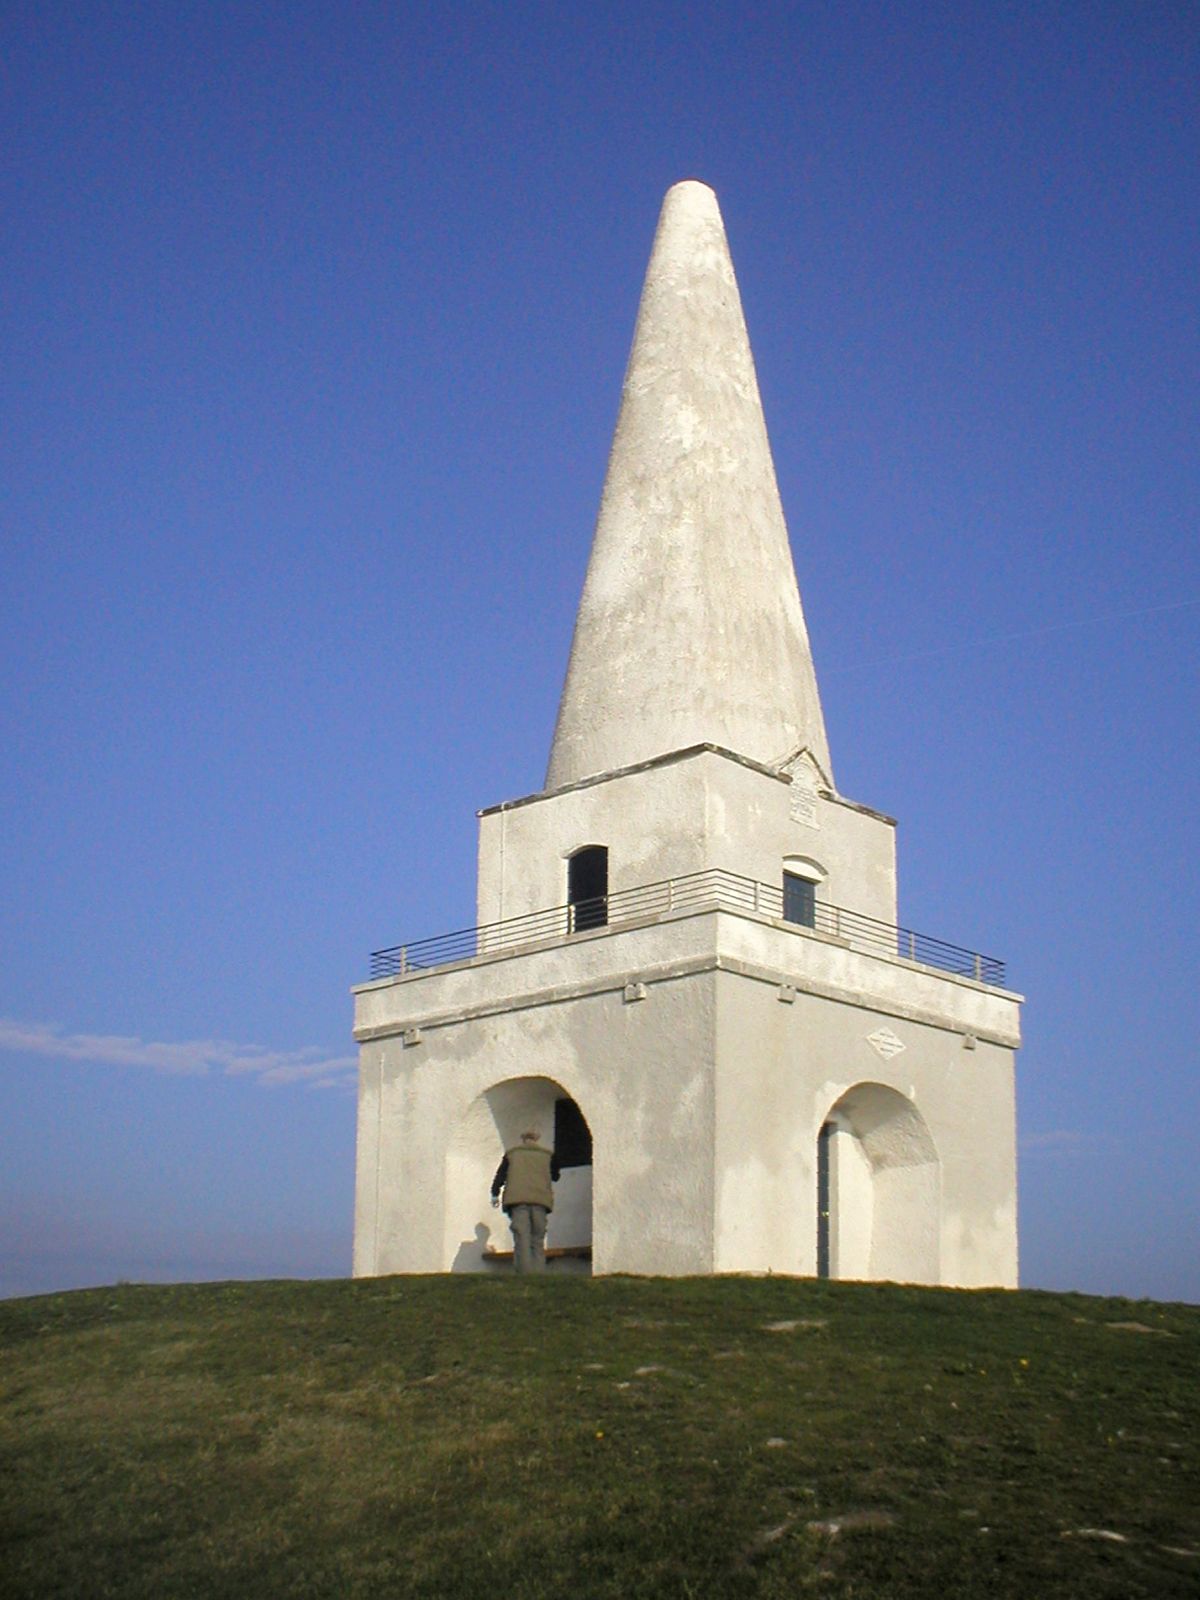 File:Killiney Hill Obelisk 2.jpg - Wikipedia